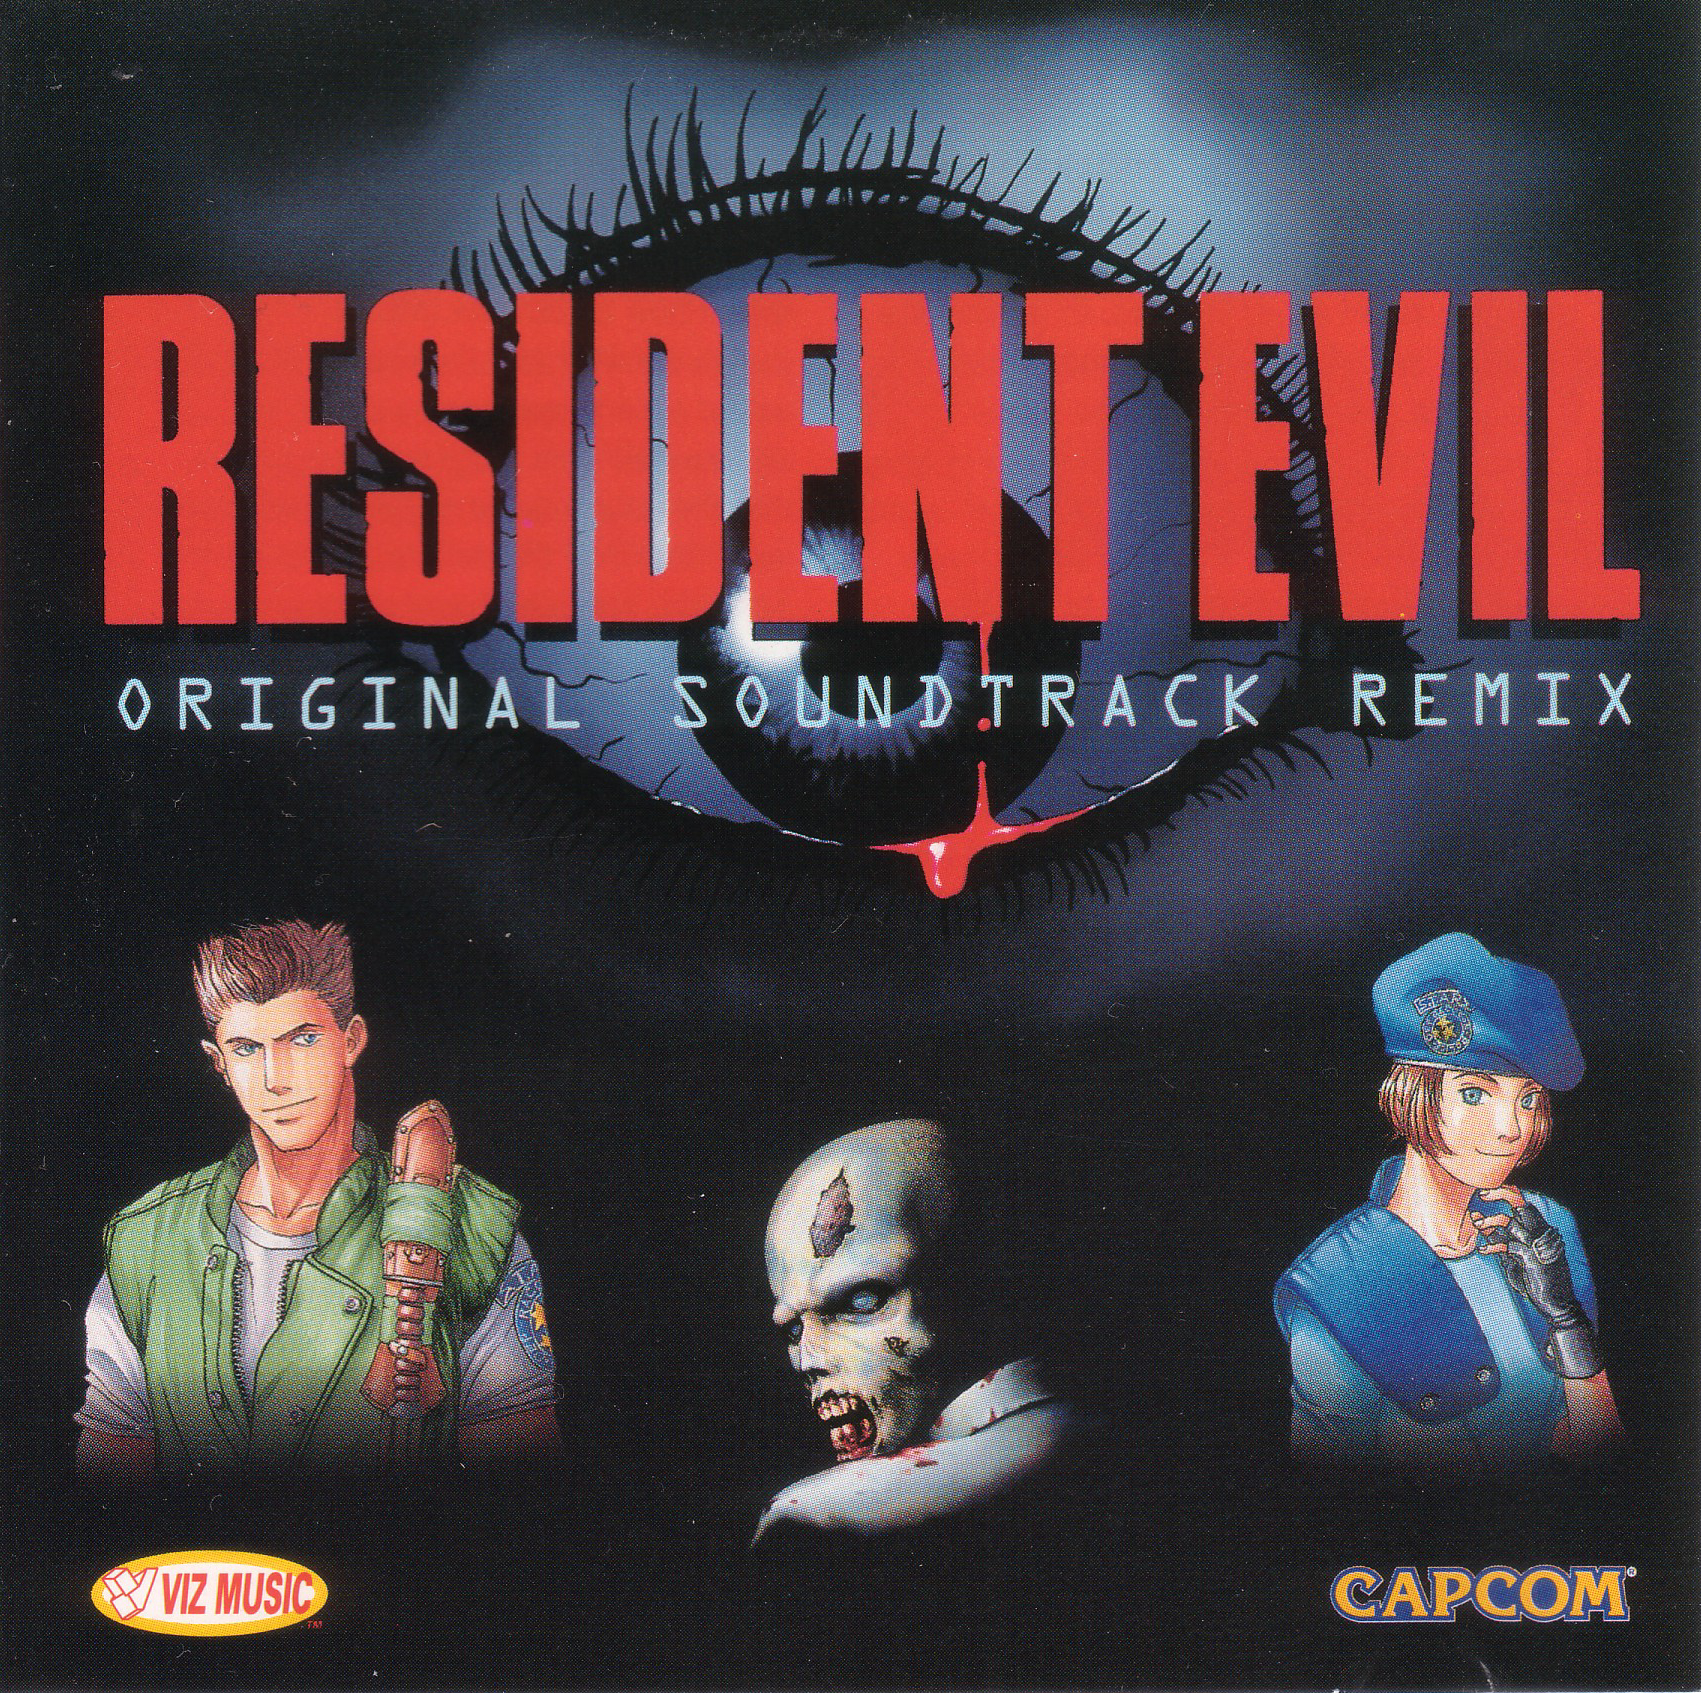 Resident Evil 1 Re-remake PS5 Cover by WatashiiZ on DeviantArt